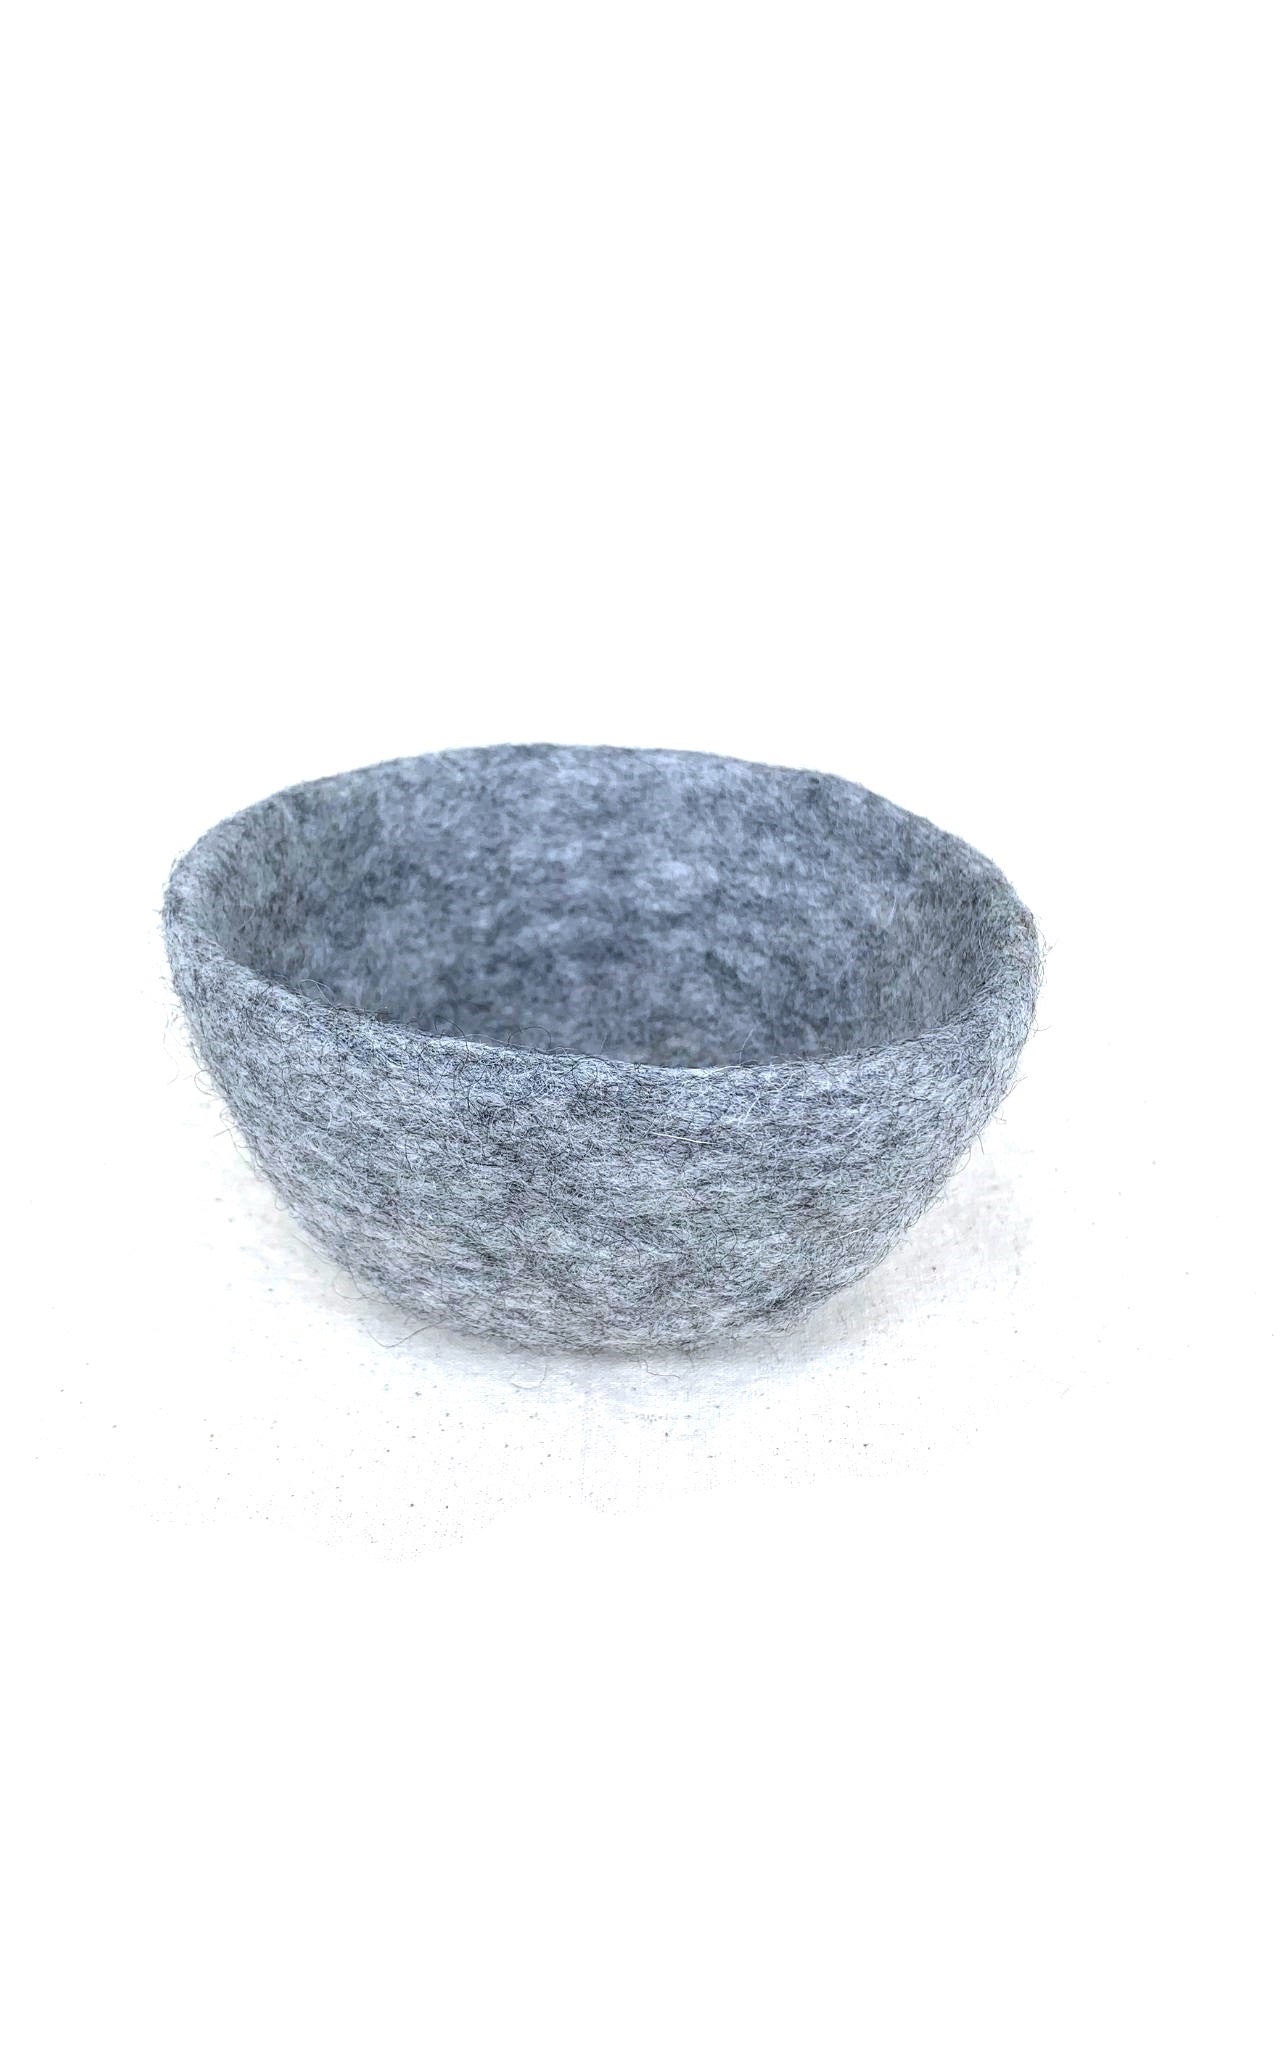 Surya Australia Ethically Made Felt Storage Bowl from Nepal - Grey